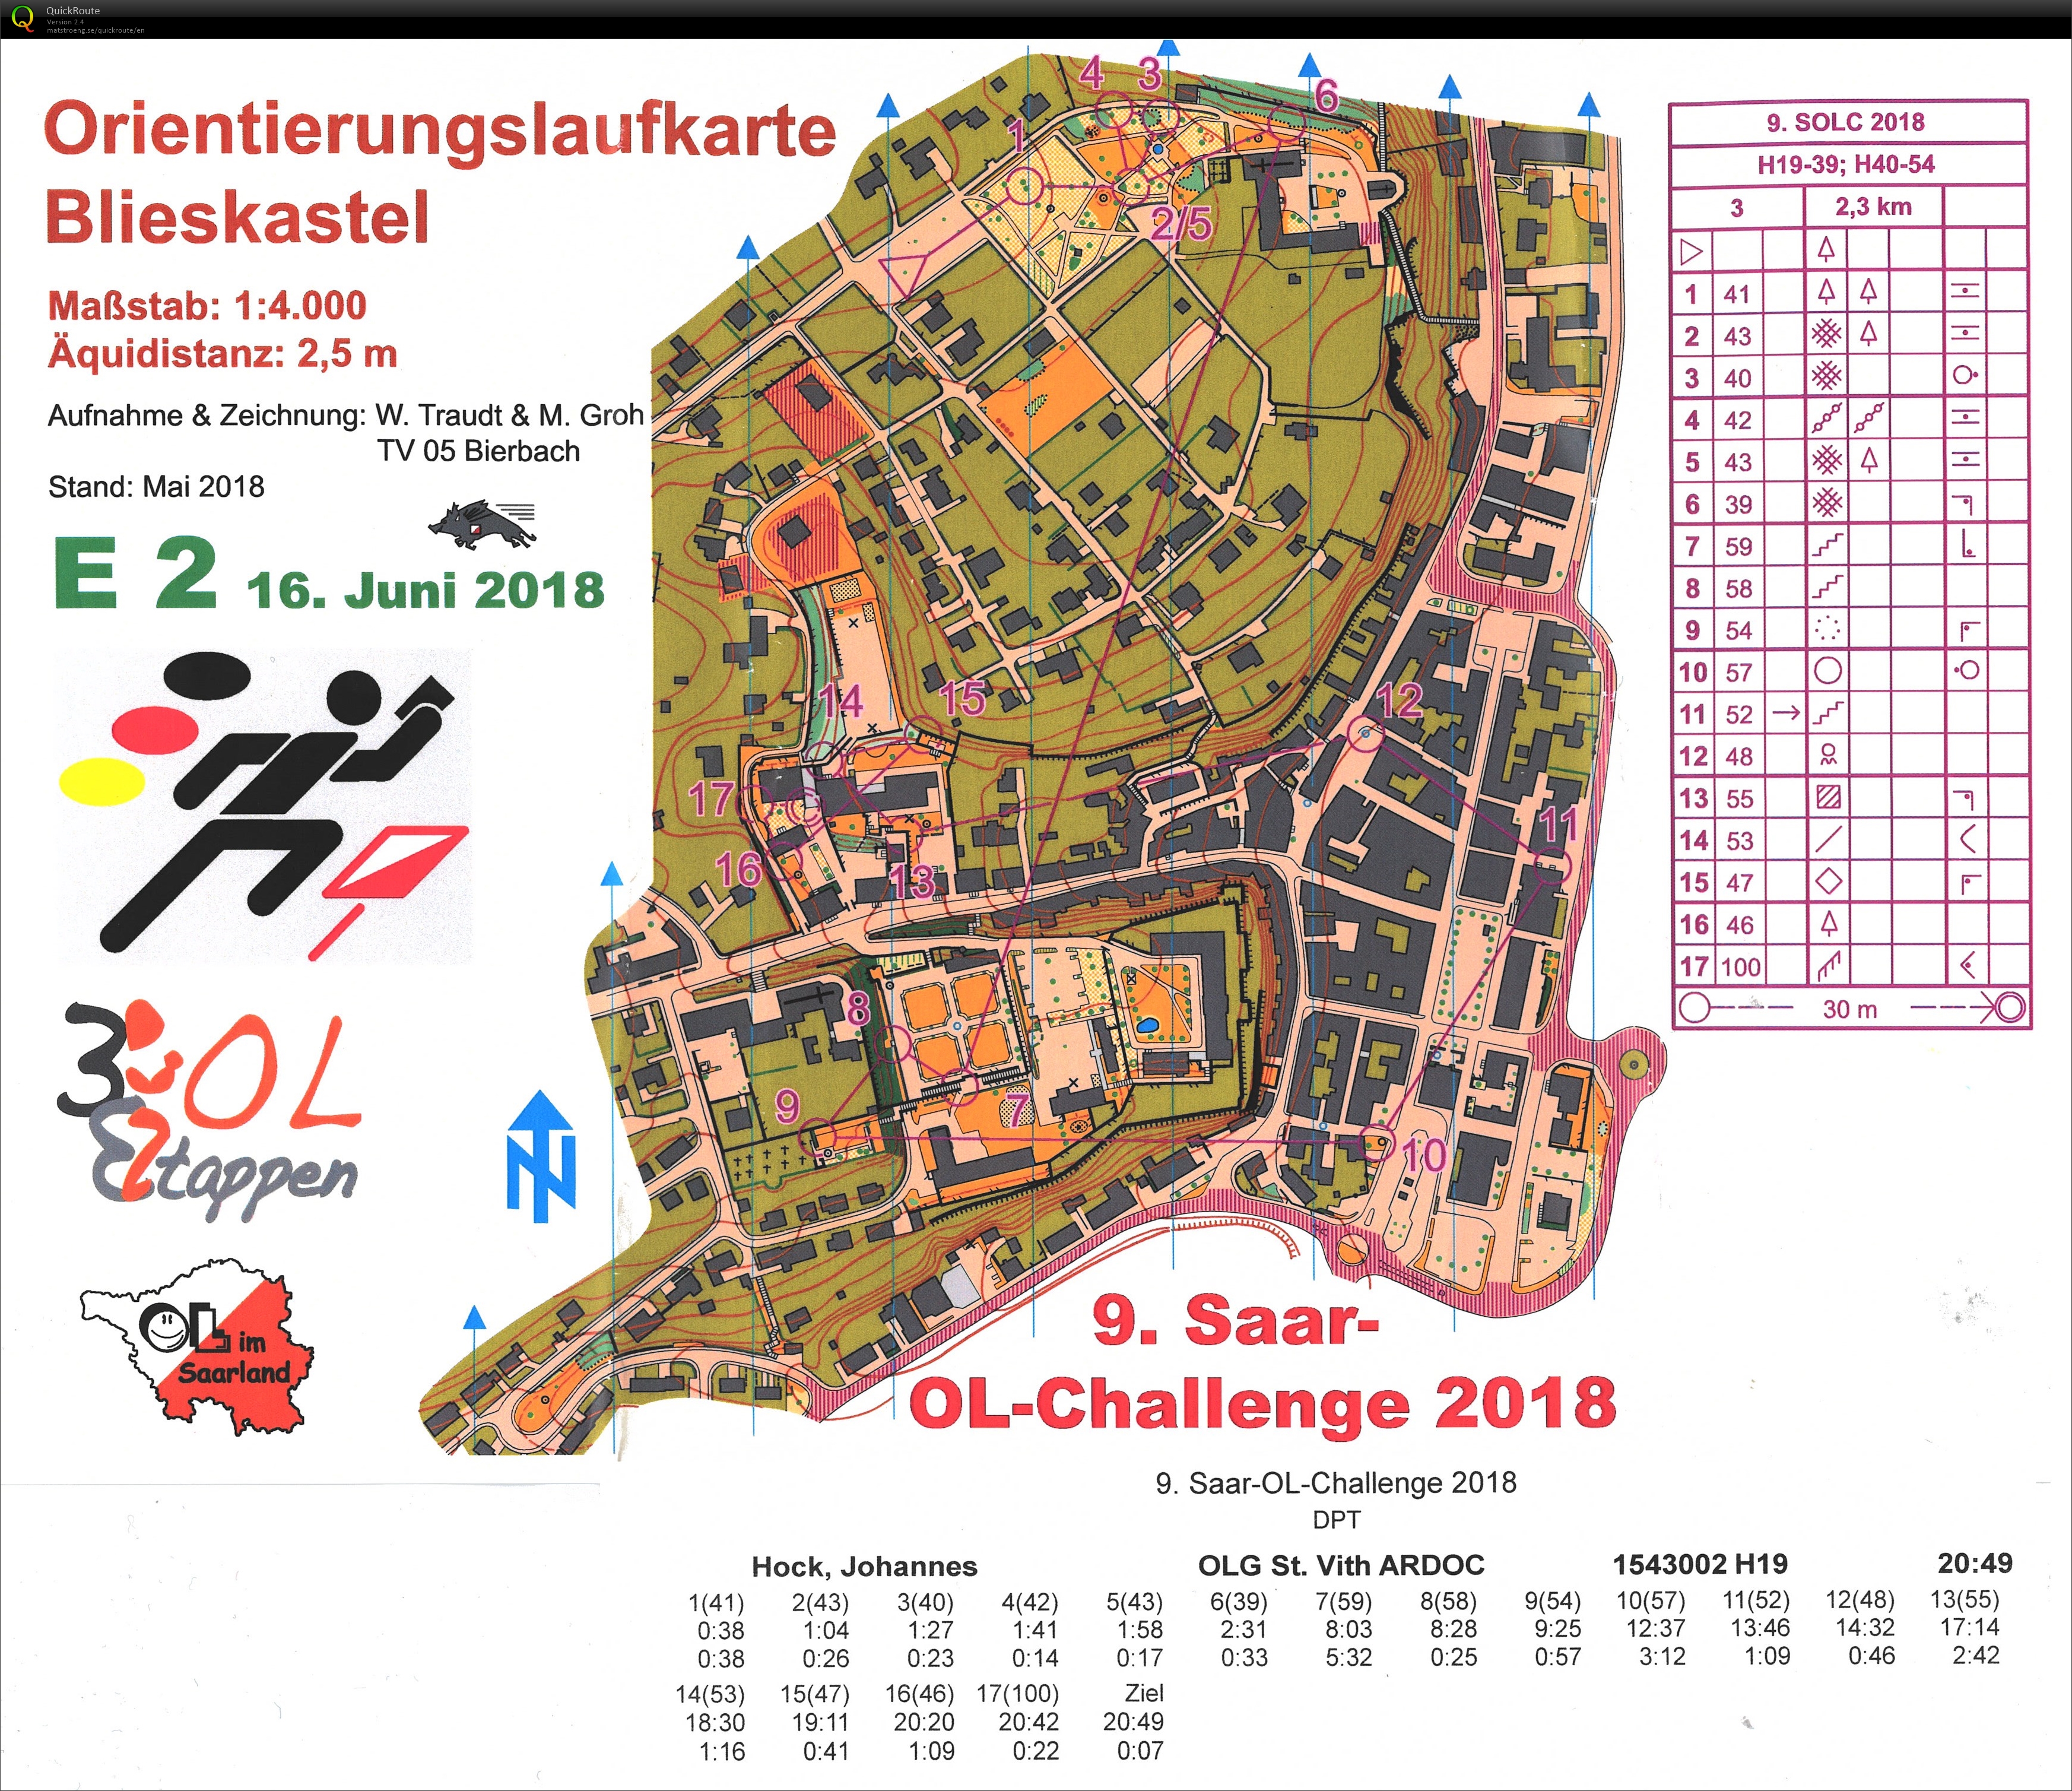 9. Saar-OL-Challenge 2018 (16.06.2018)